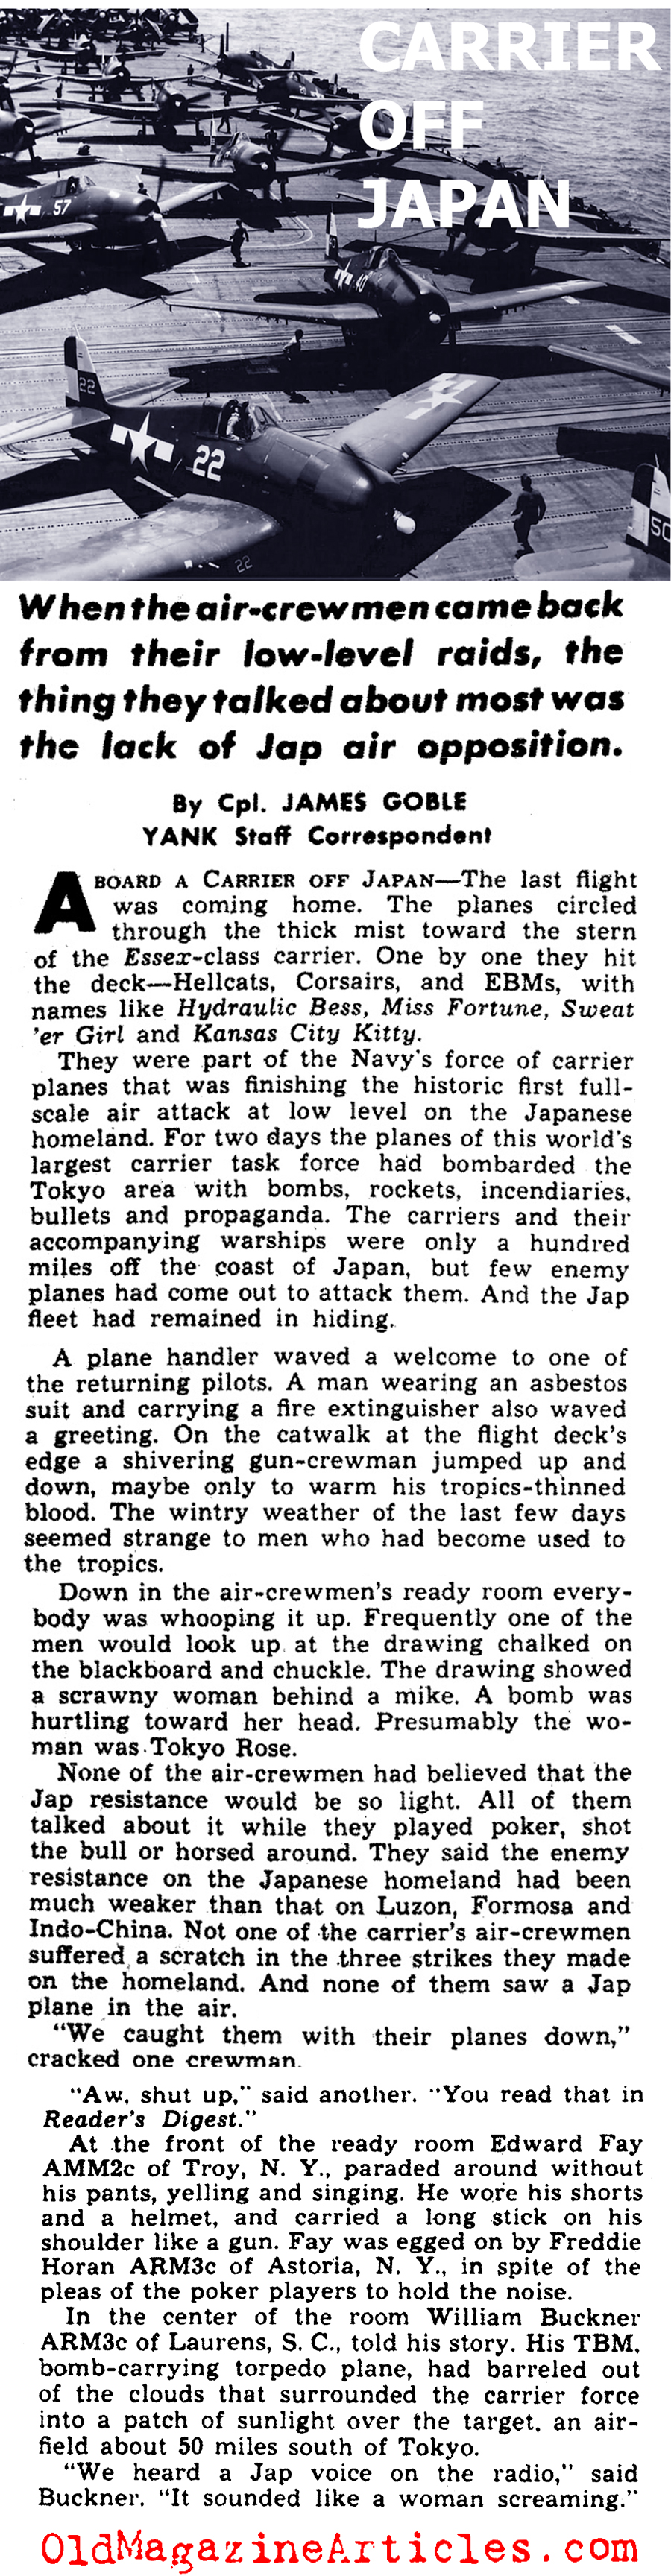 Taking the War to Japan's Doorstep (Yank Magazine, 1945)